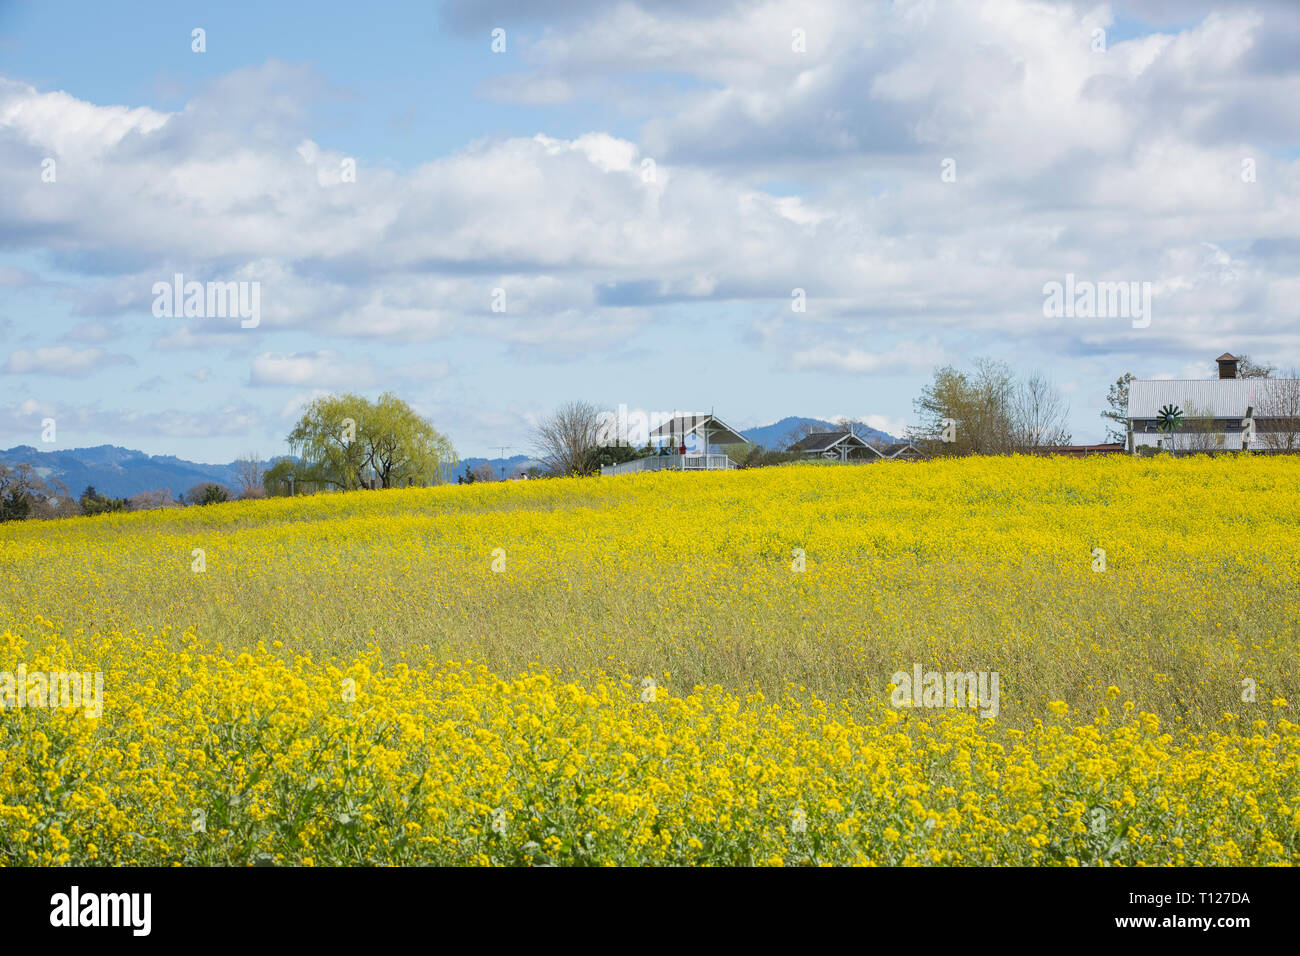 Field of yellow mustard plant in bloom after spring rains at Laguna de Santa Rosa, Santa Rosa, California Stock Photo